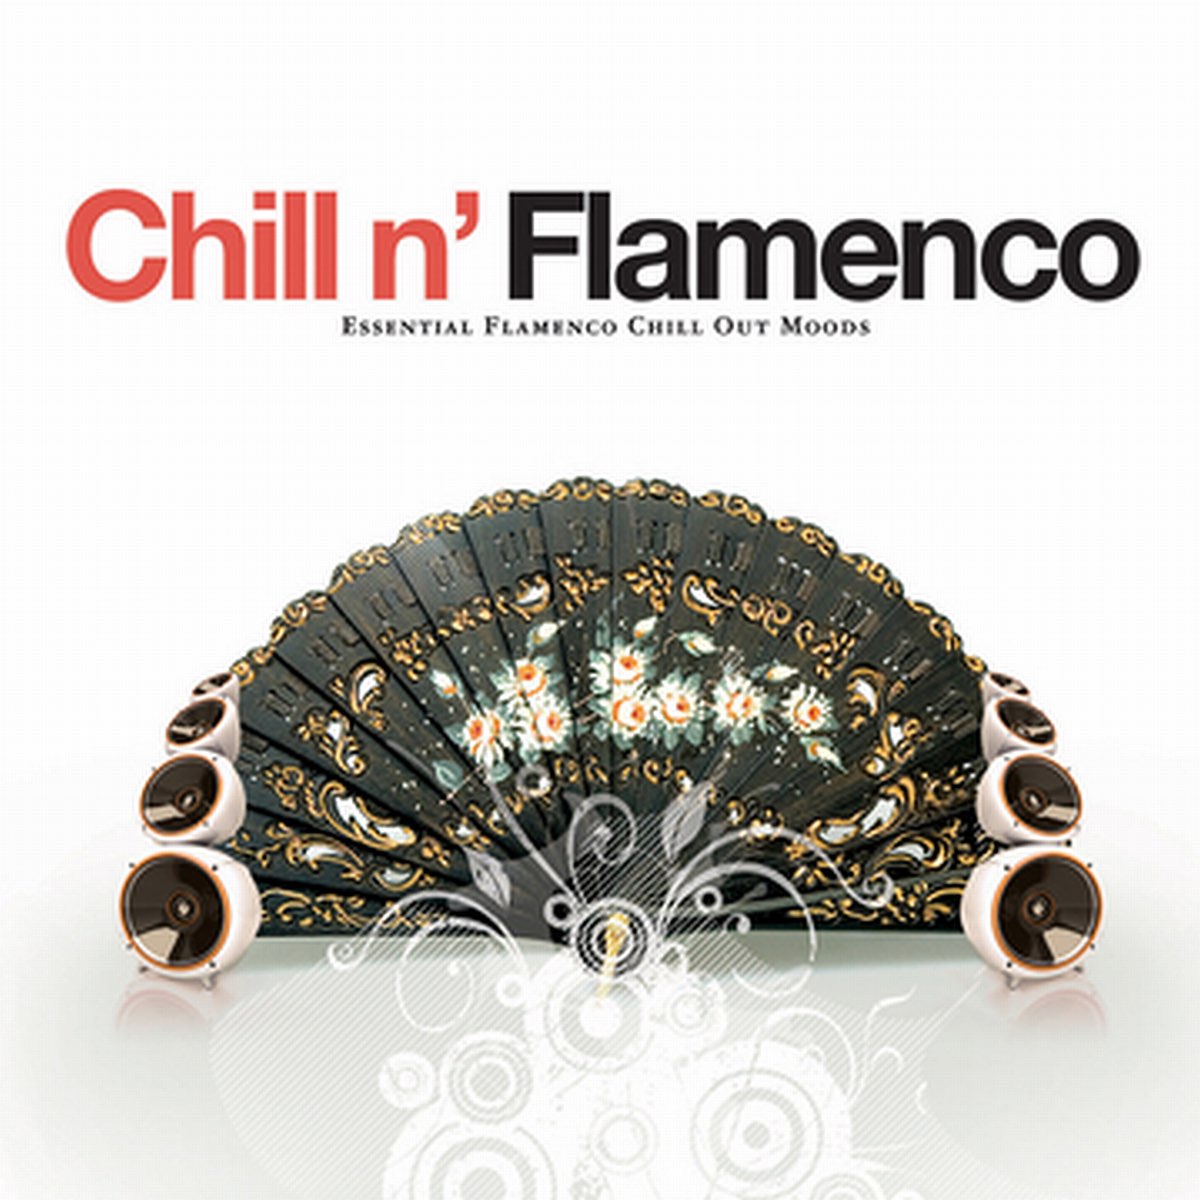 Flamenco Groove 2006 ilibiza. Chill n